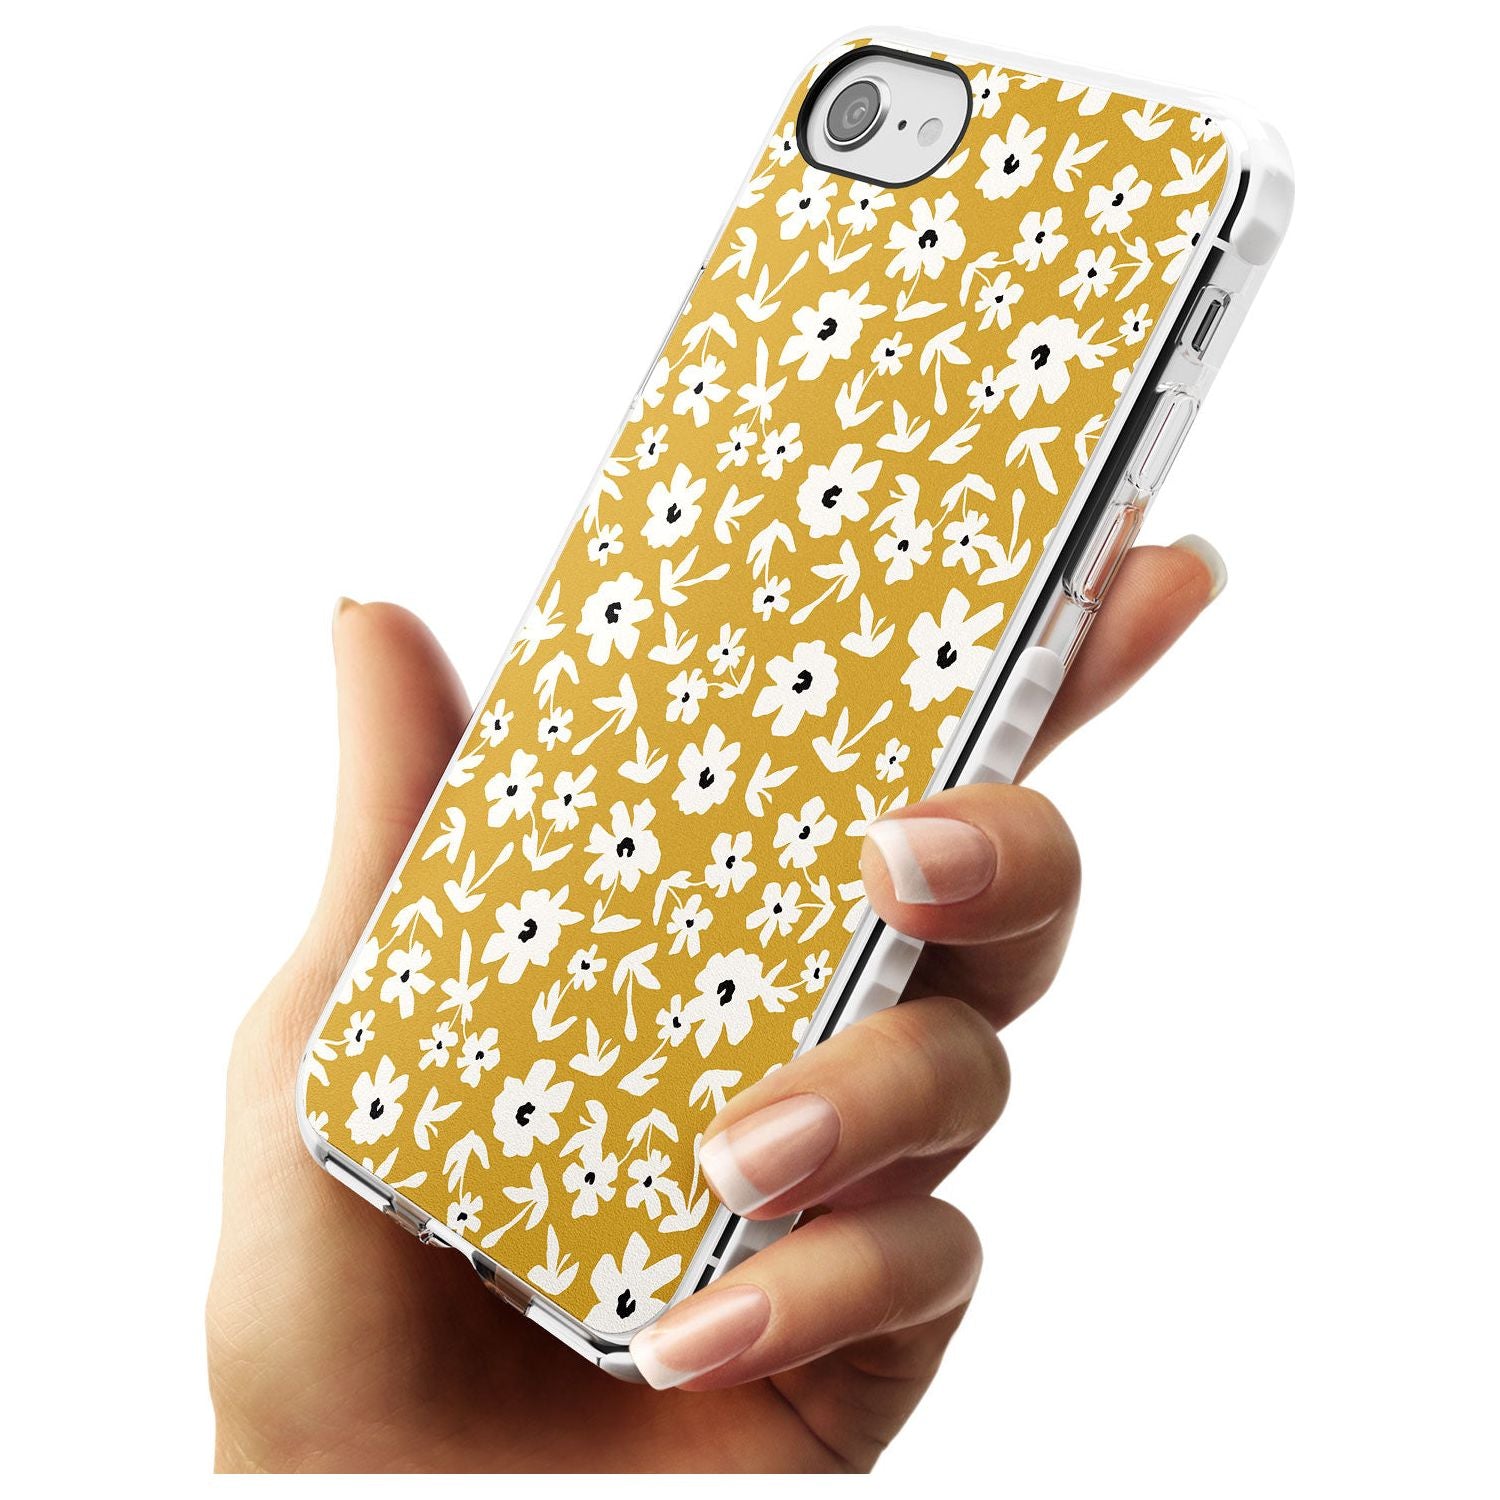 Floral Print on Mustard - Cute Floral Design Slim TPU Phone Case for iPhone SE 8 7 Plus